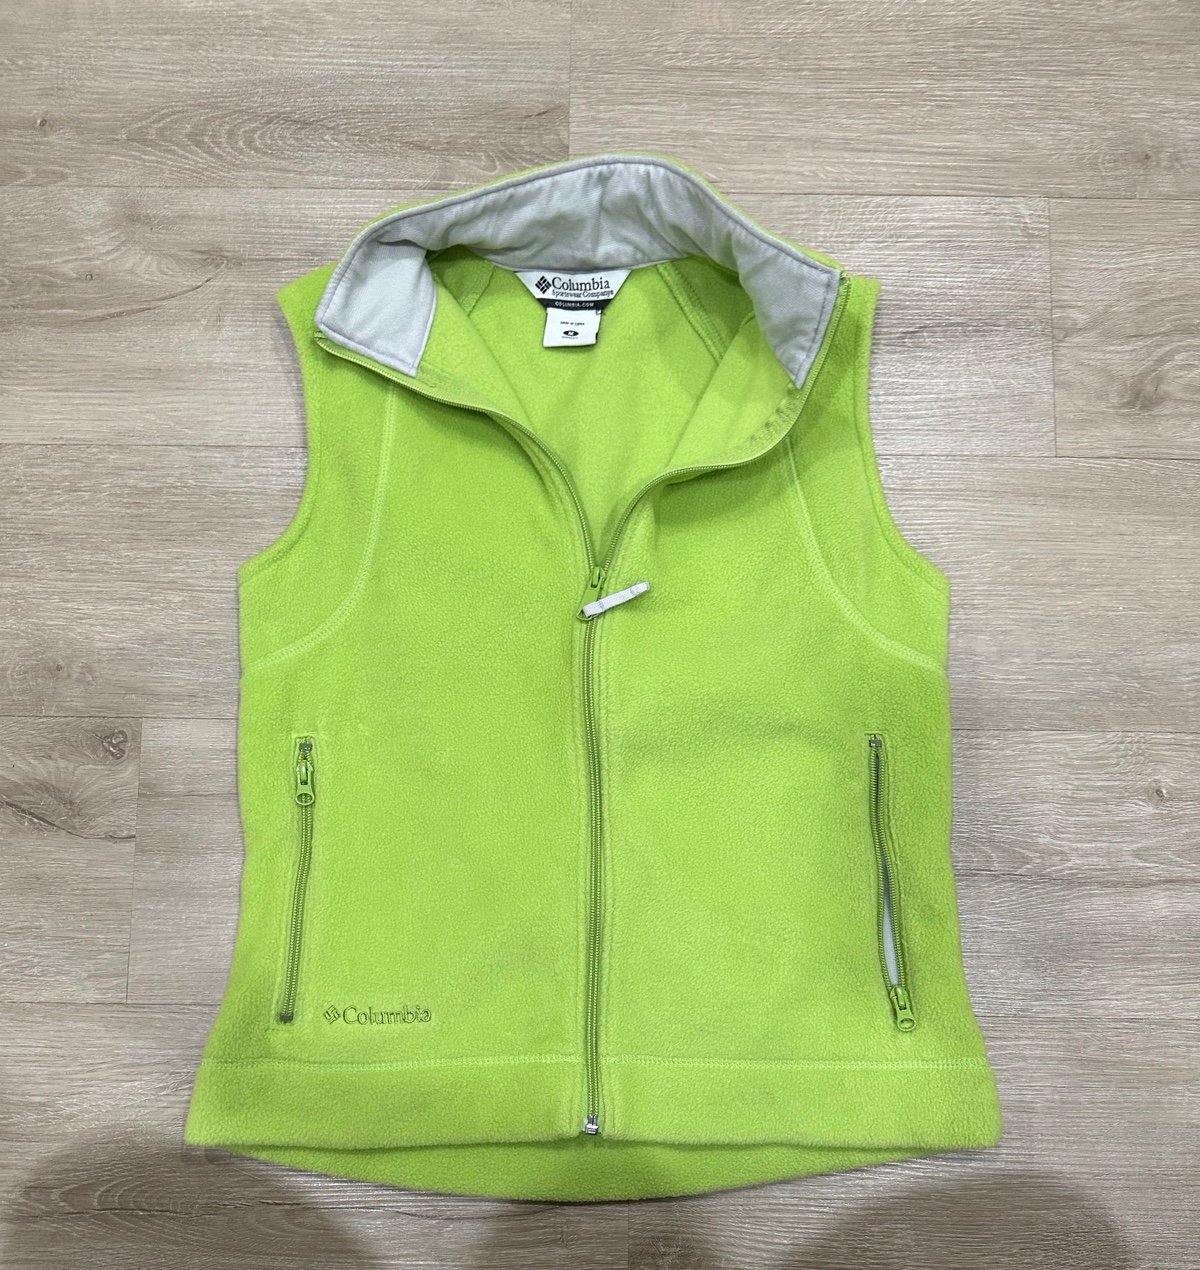 Columbia lime green zip up vest women’s size medium Mc9K5hXzS